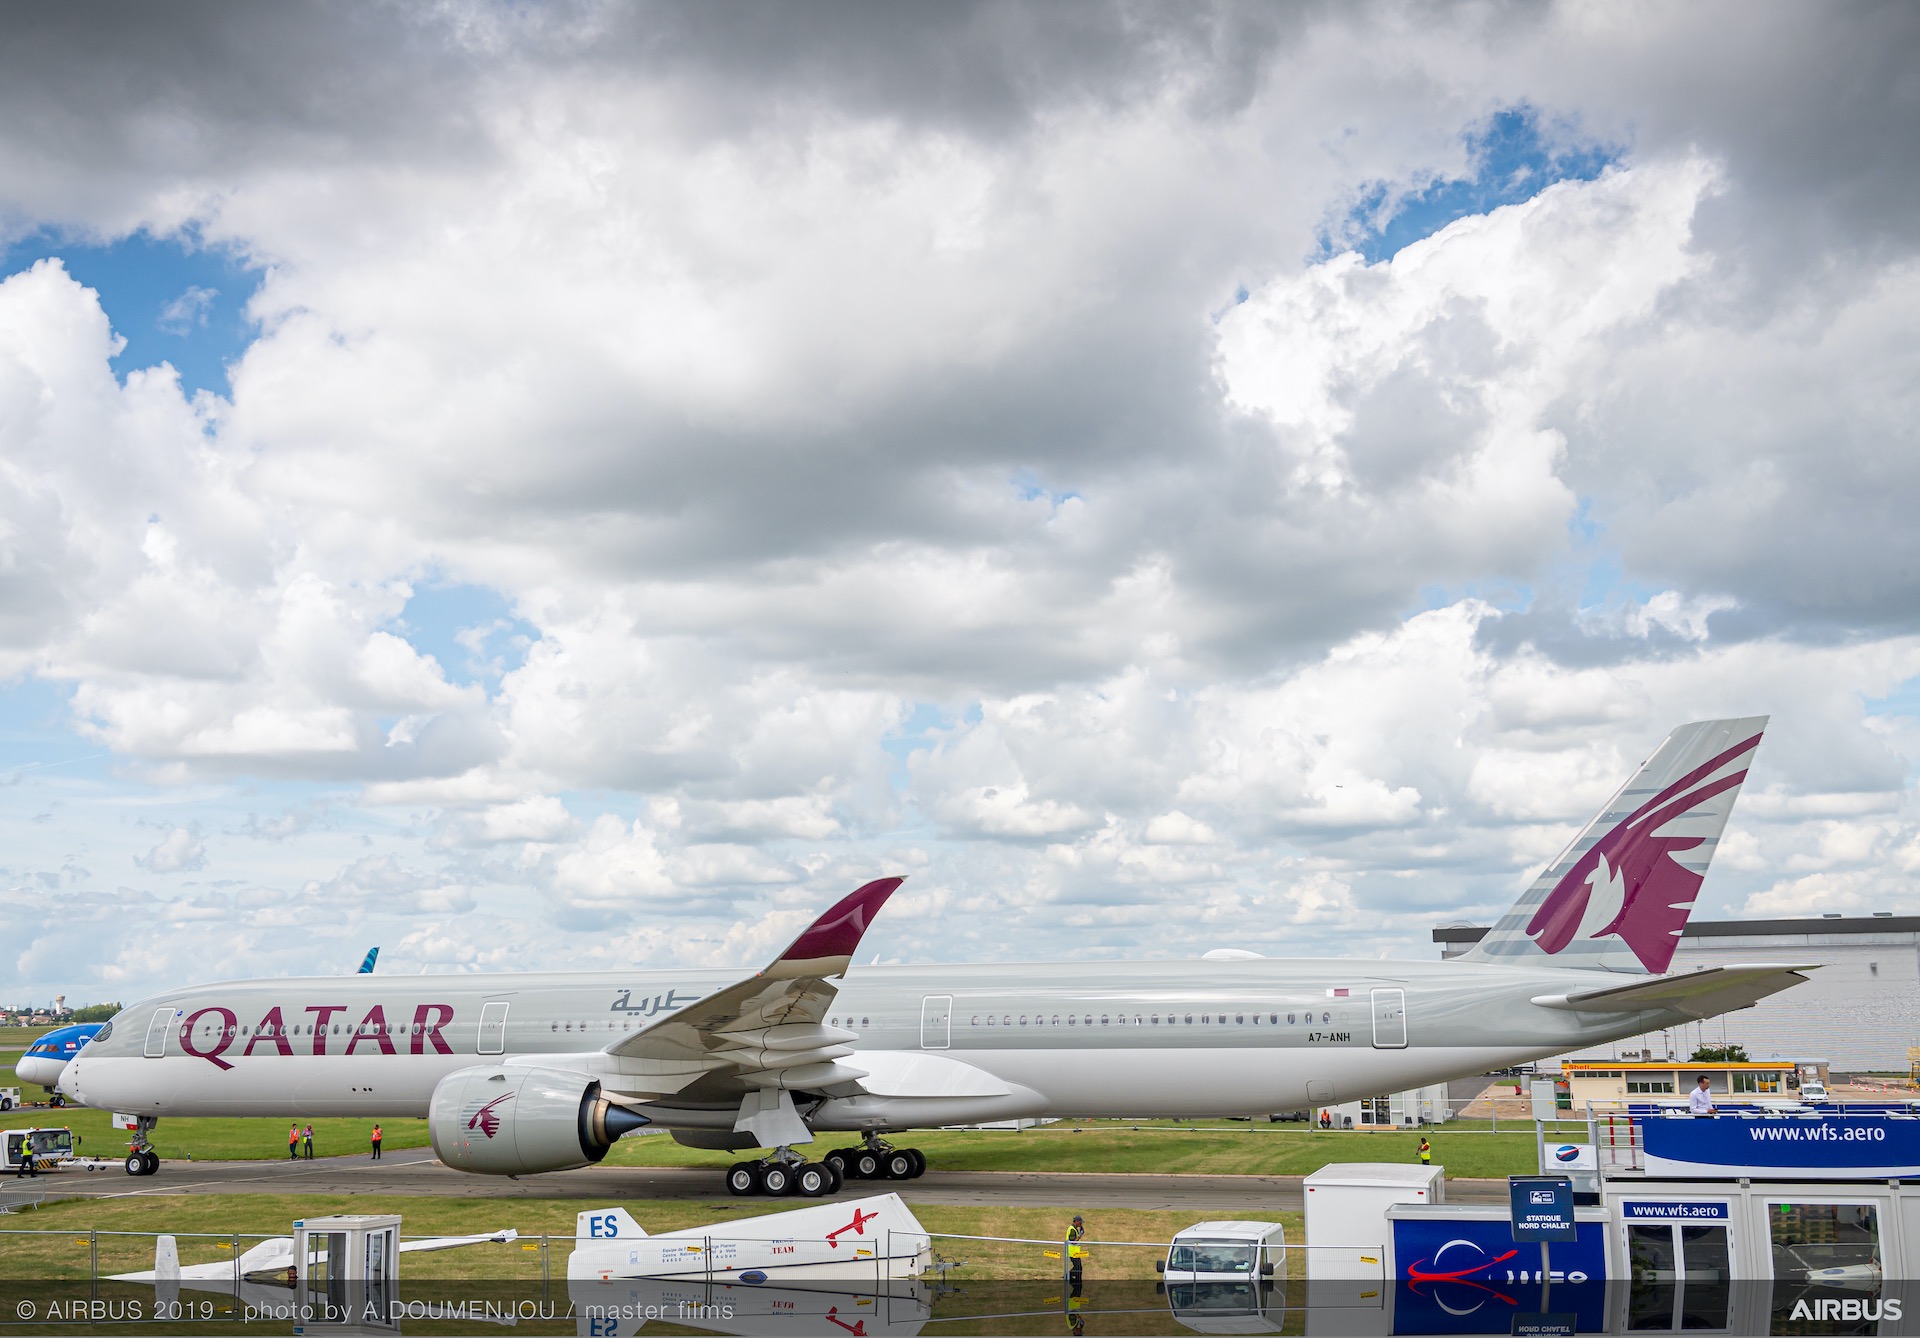 UK court orders Airbus to revoke cancellations of $6 billion Qatar Airways planes